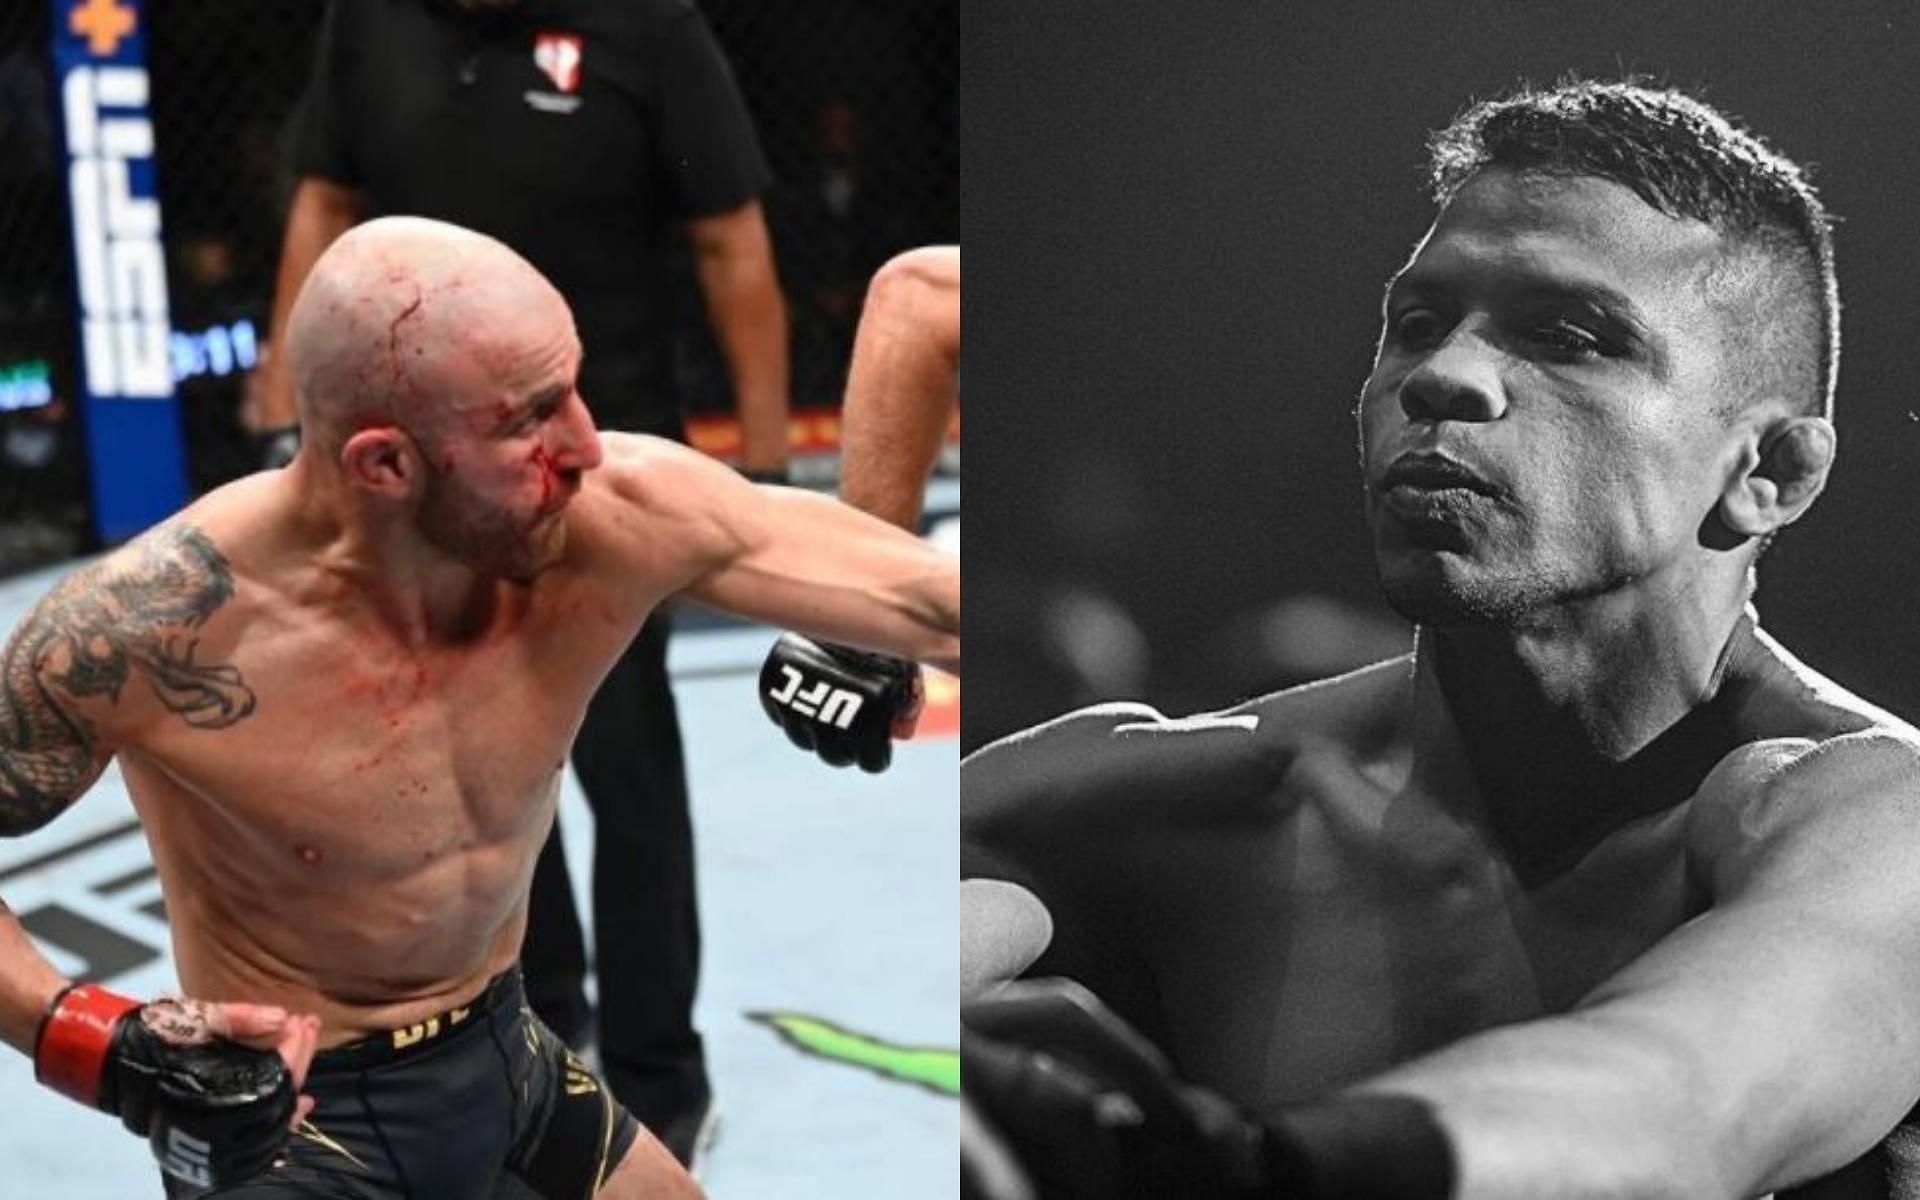 Volkanovski (left) vs. Fernandes (right) at 145 pounds has the makings of an MMA classic. (Credits: @alexvolkanovski, @bibianofernandes via Instagram)